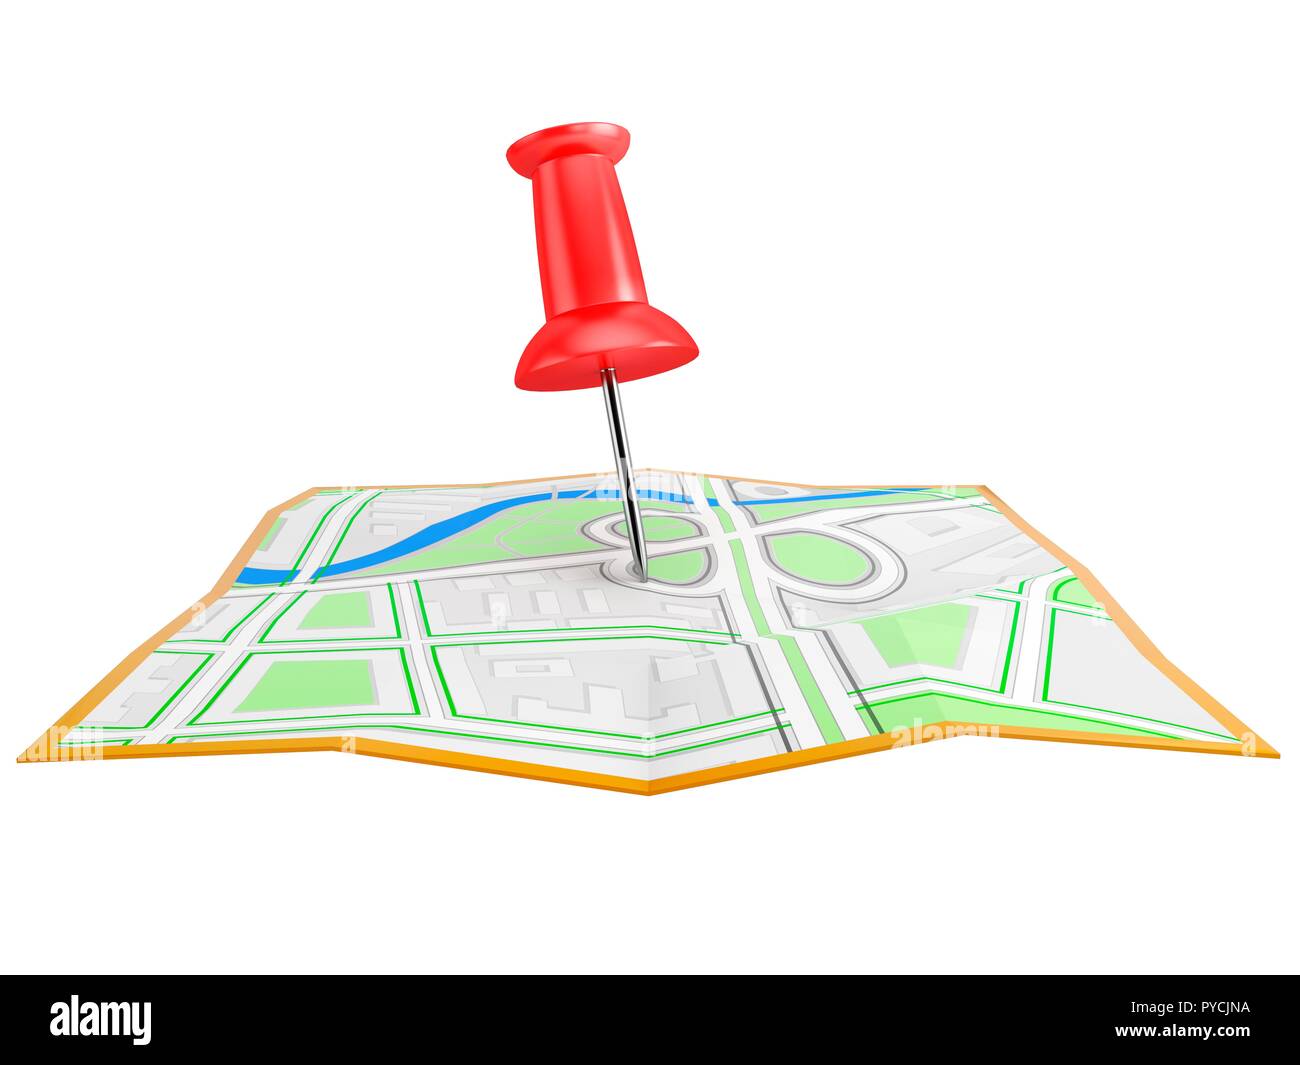 Location pin on city map, illustration. Stock Photo